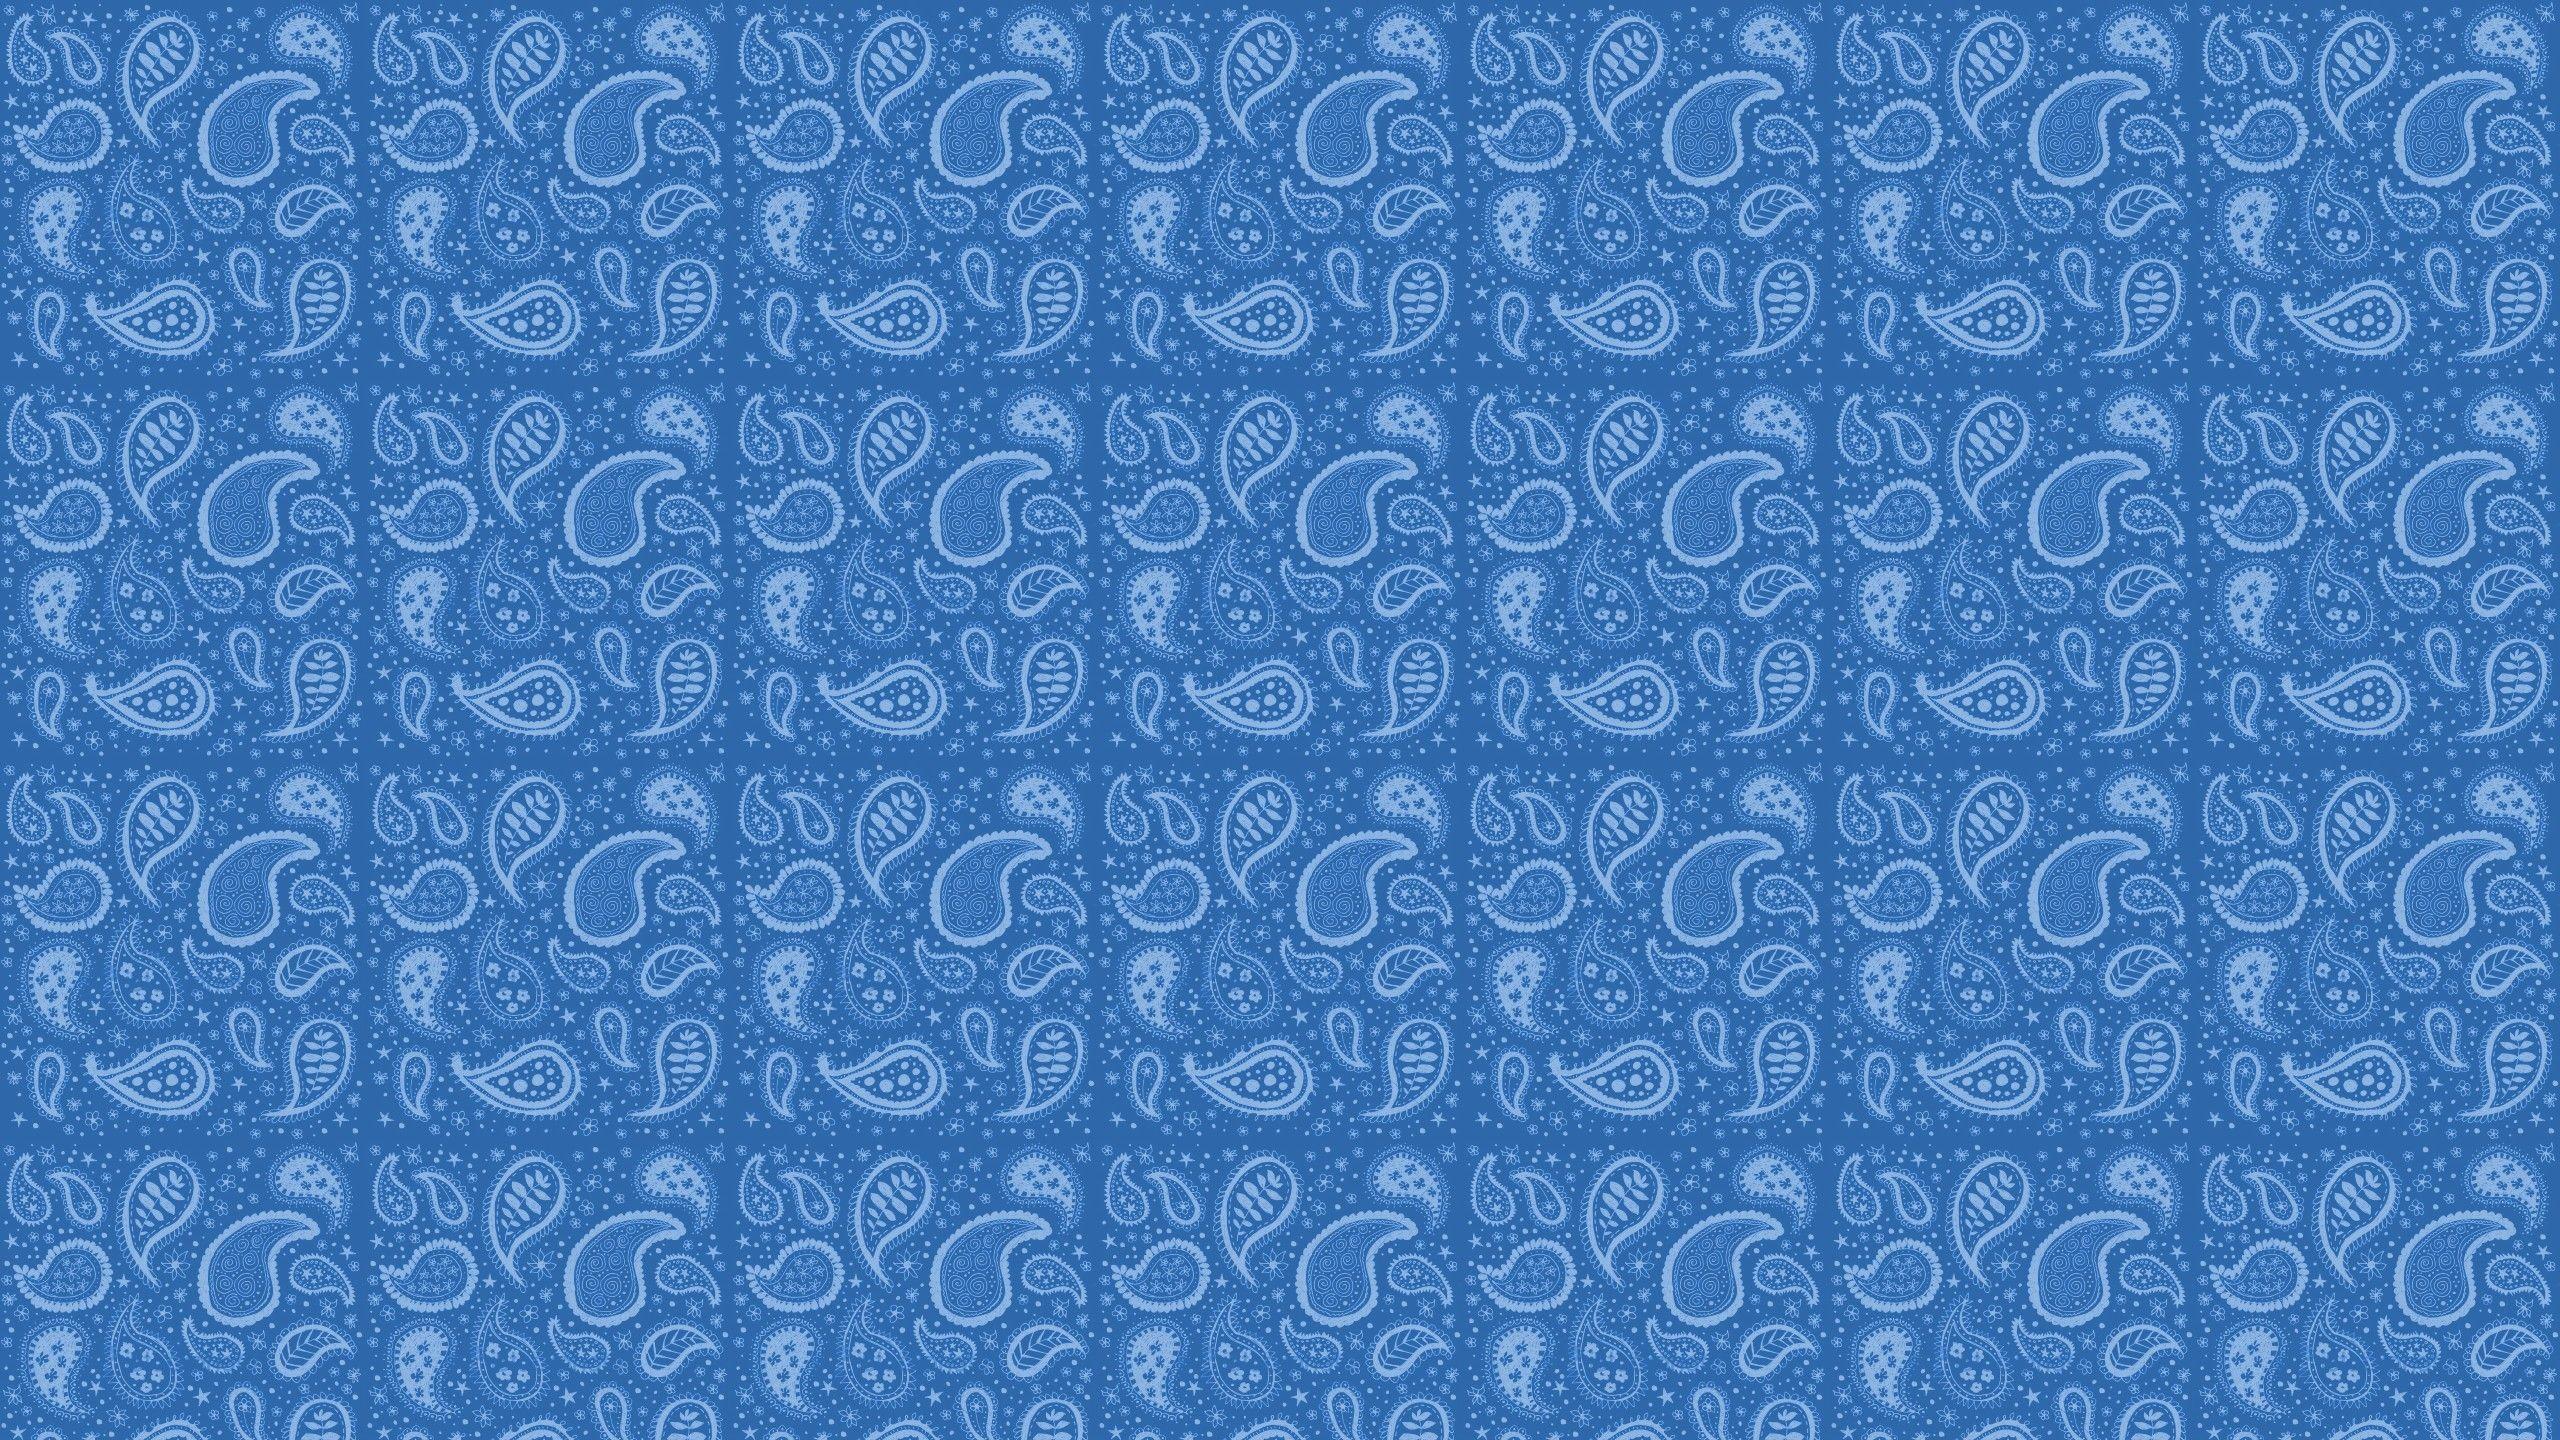 Blue Bandana wallpaper by xV1C1OUSx  Download on ZEDGE  ec35